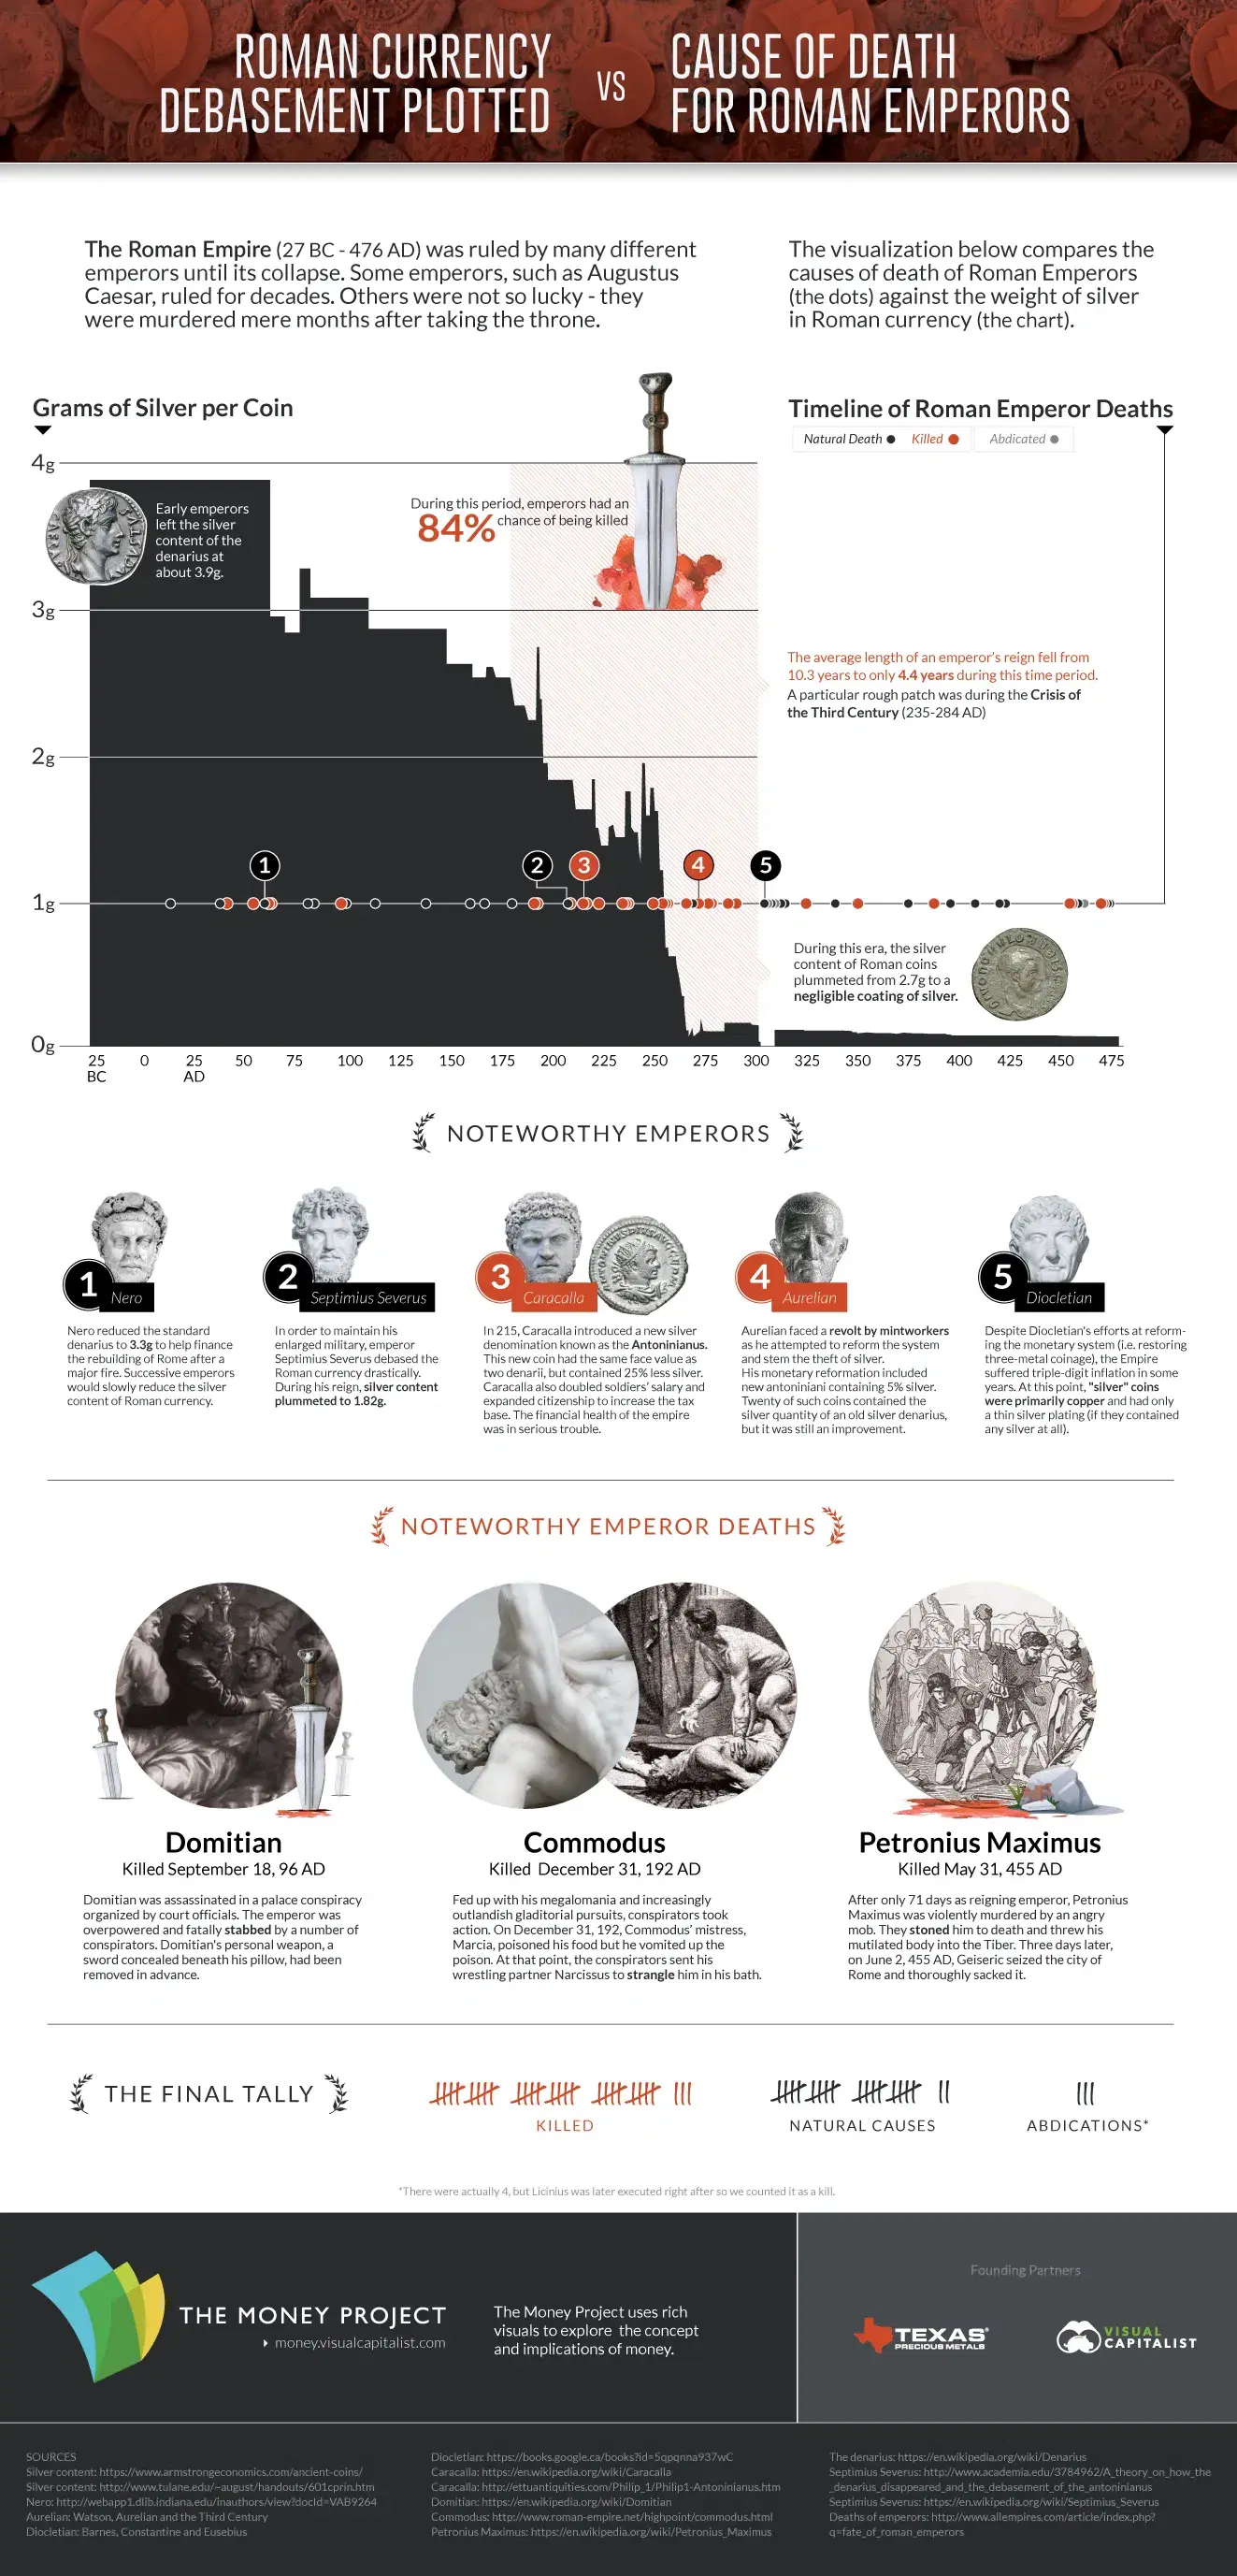 Deaths of Roman Emperors vs. Coinage Debasement